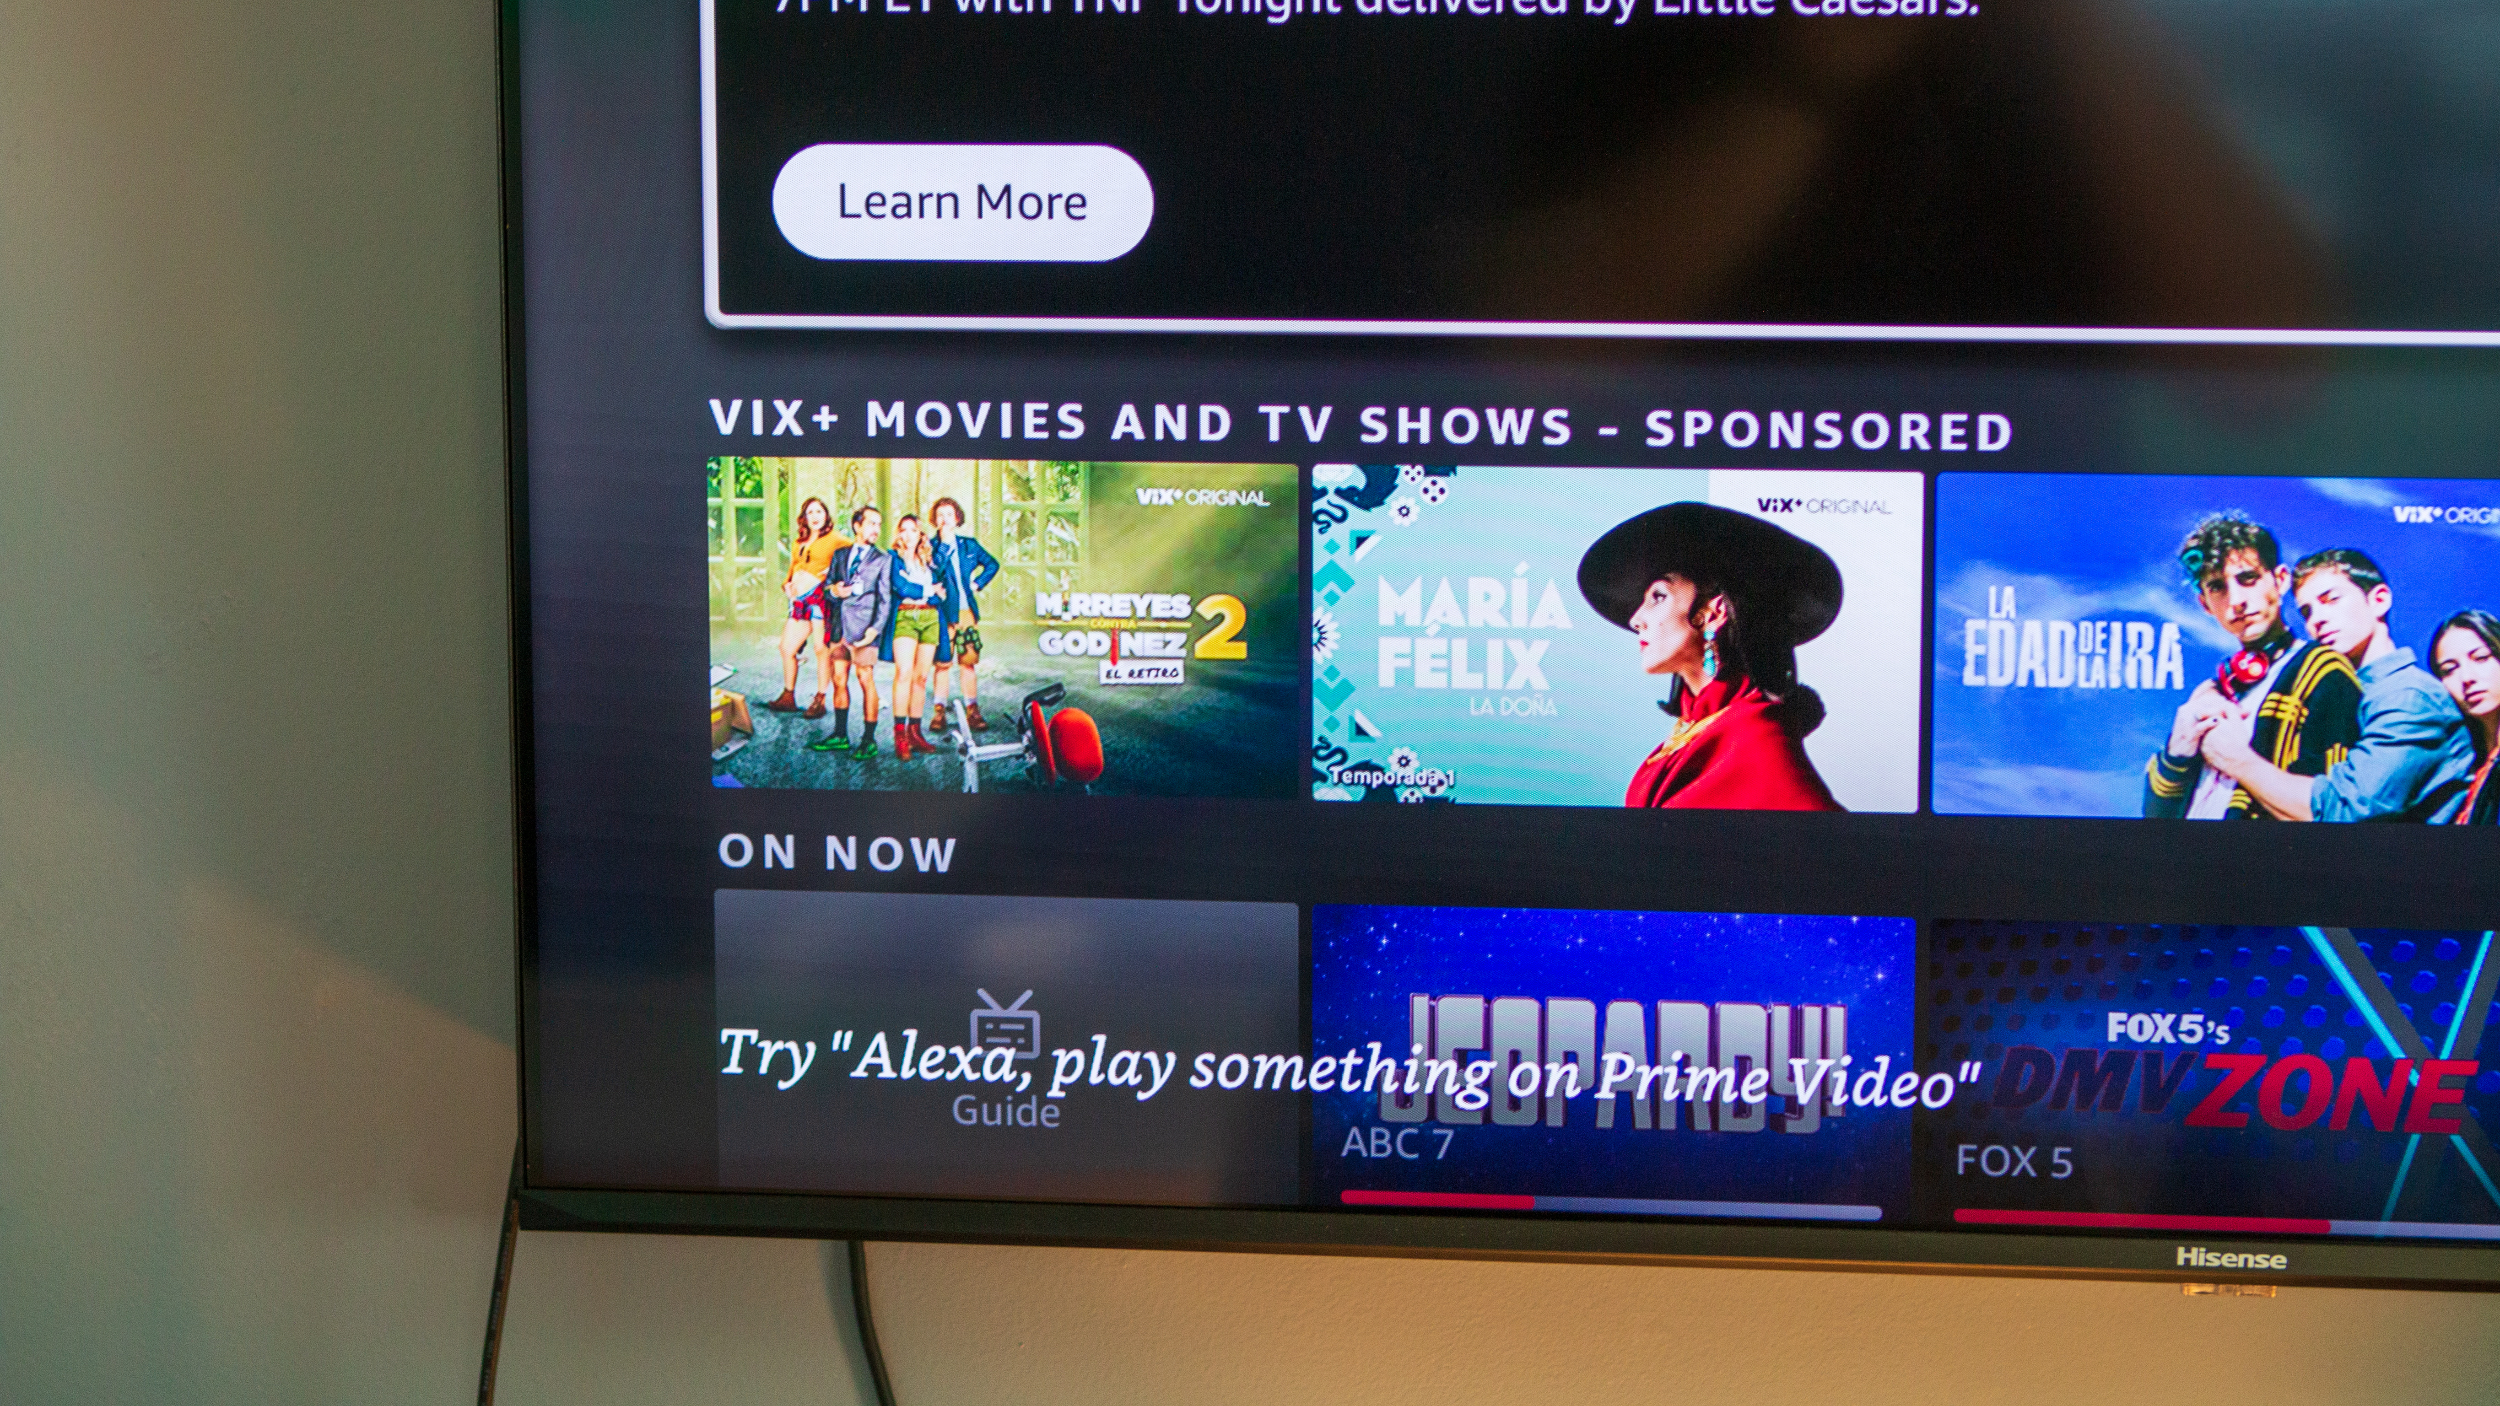 Vix+ Sponsored row on Amazon Fire TV Cube (2022)